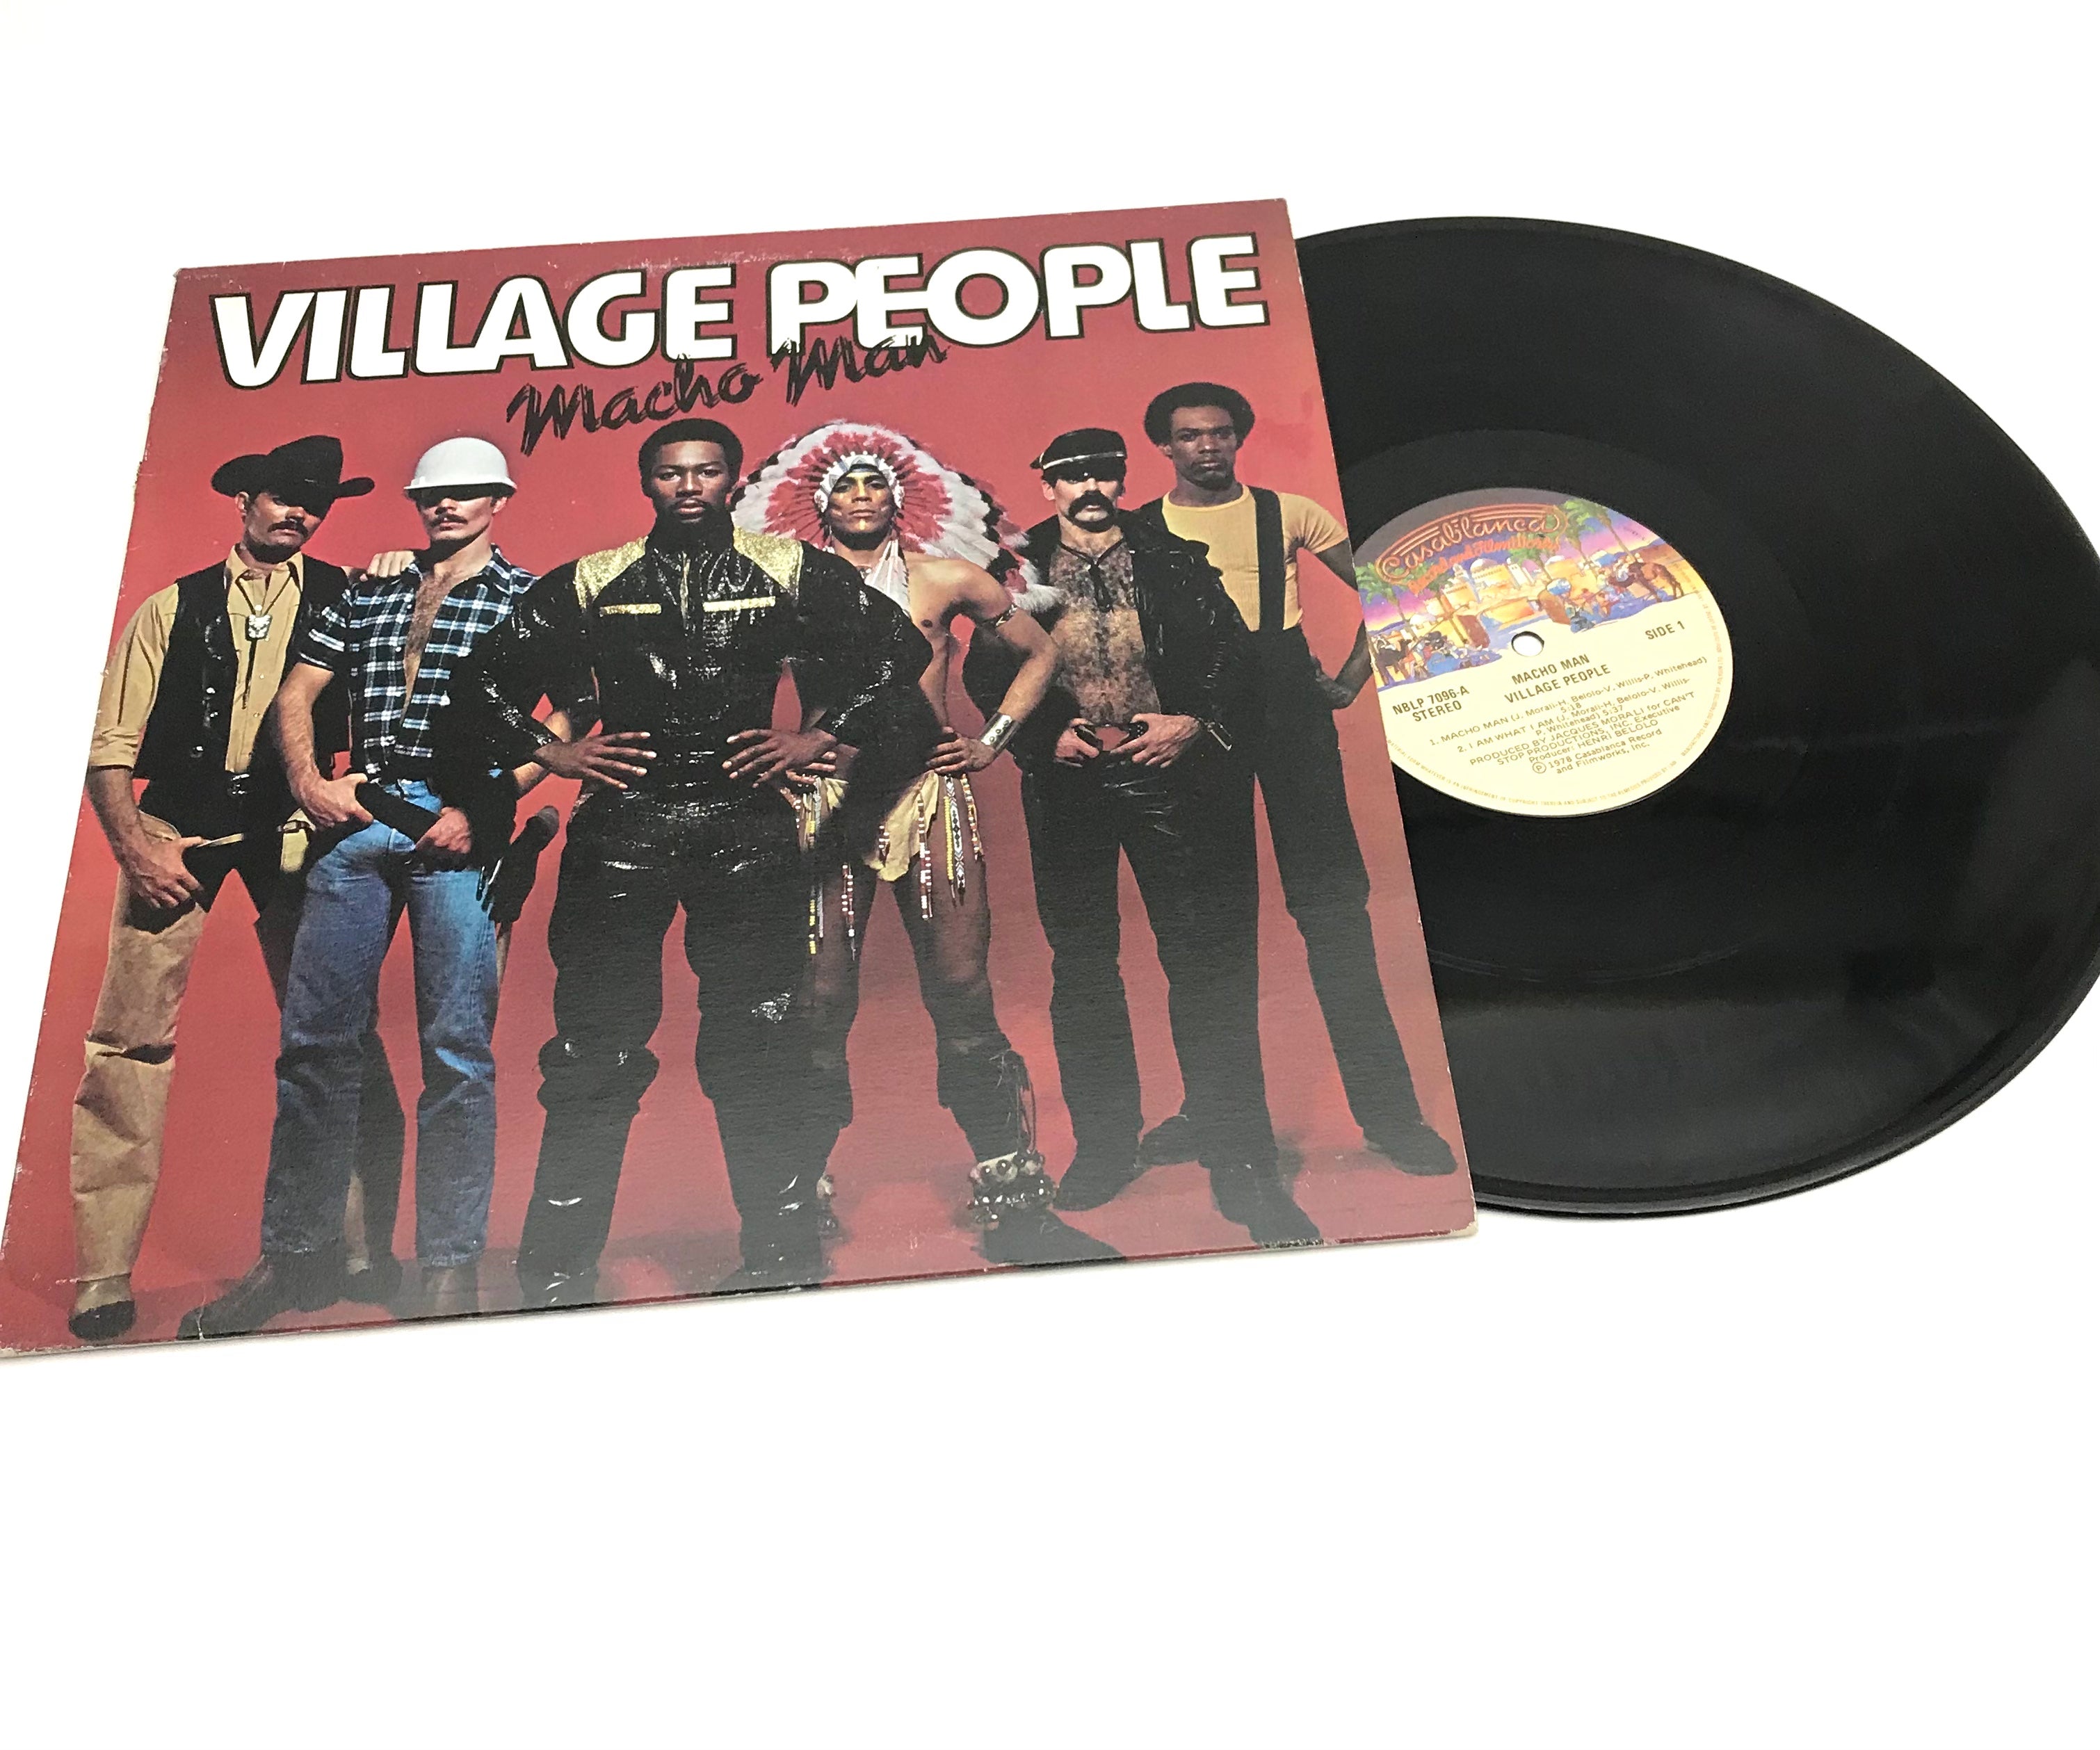 Village People - Macho Man - Vinyl LP - 1978